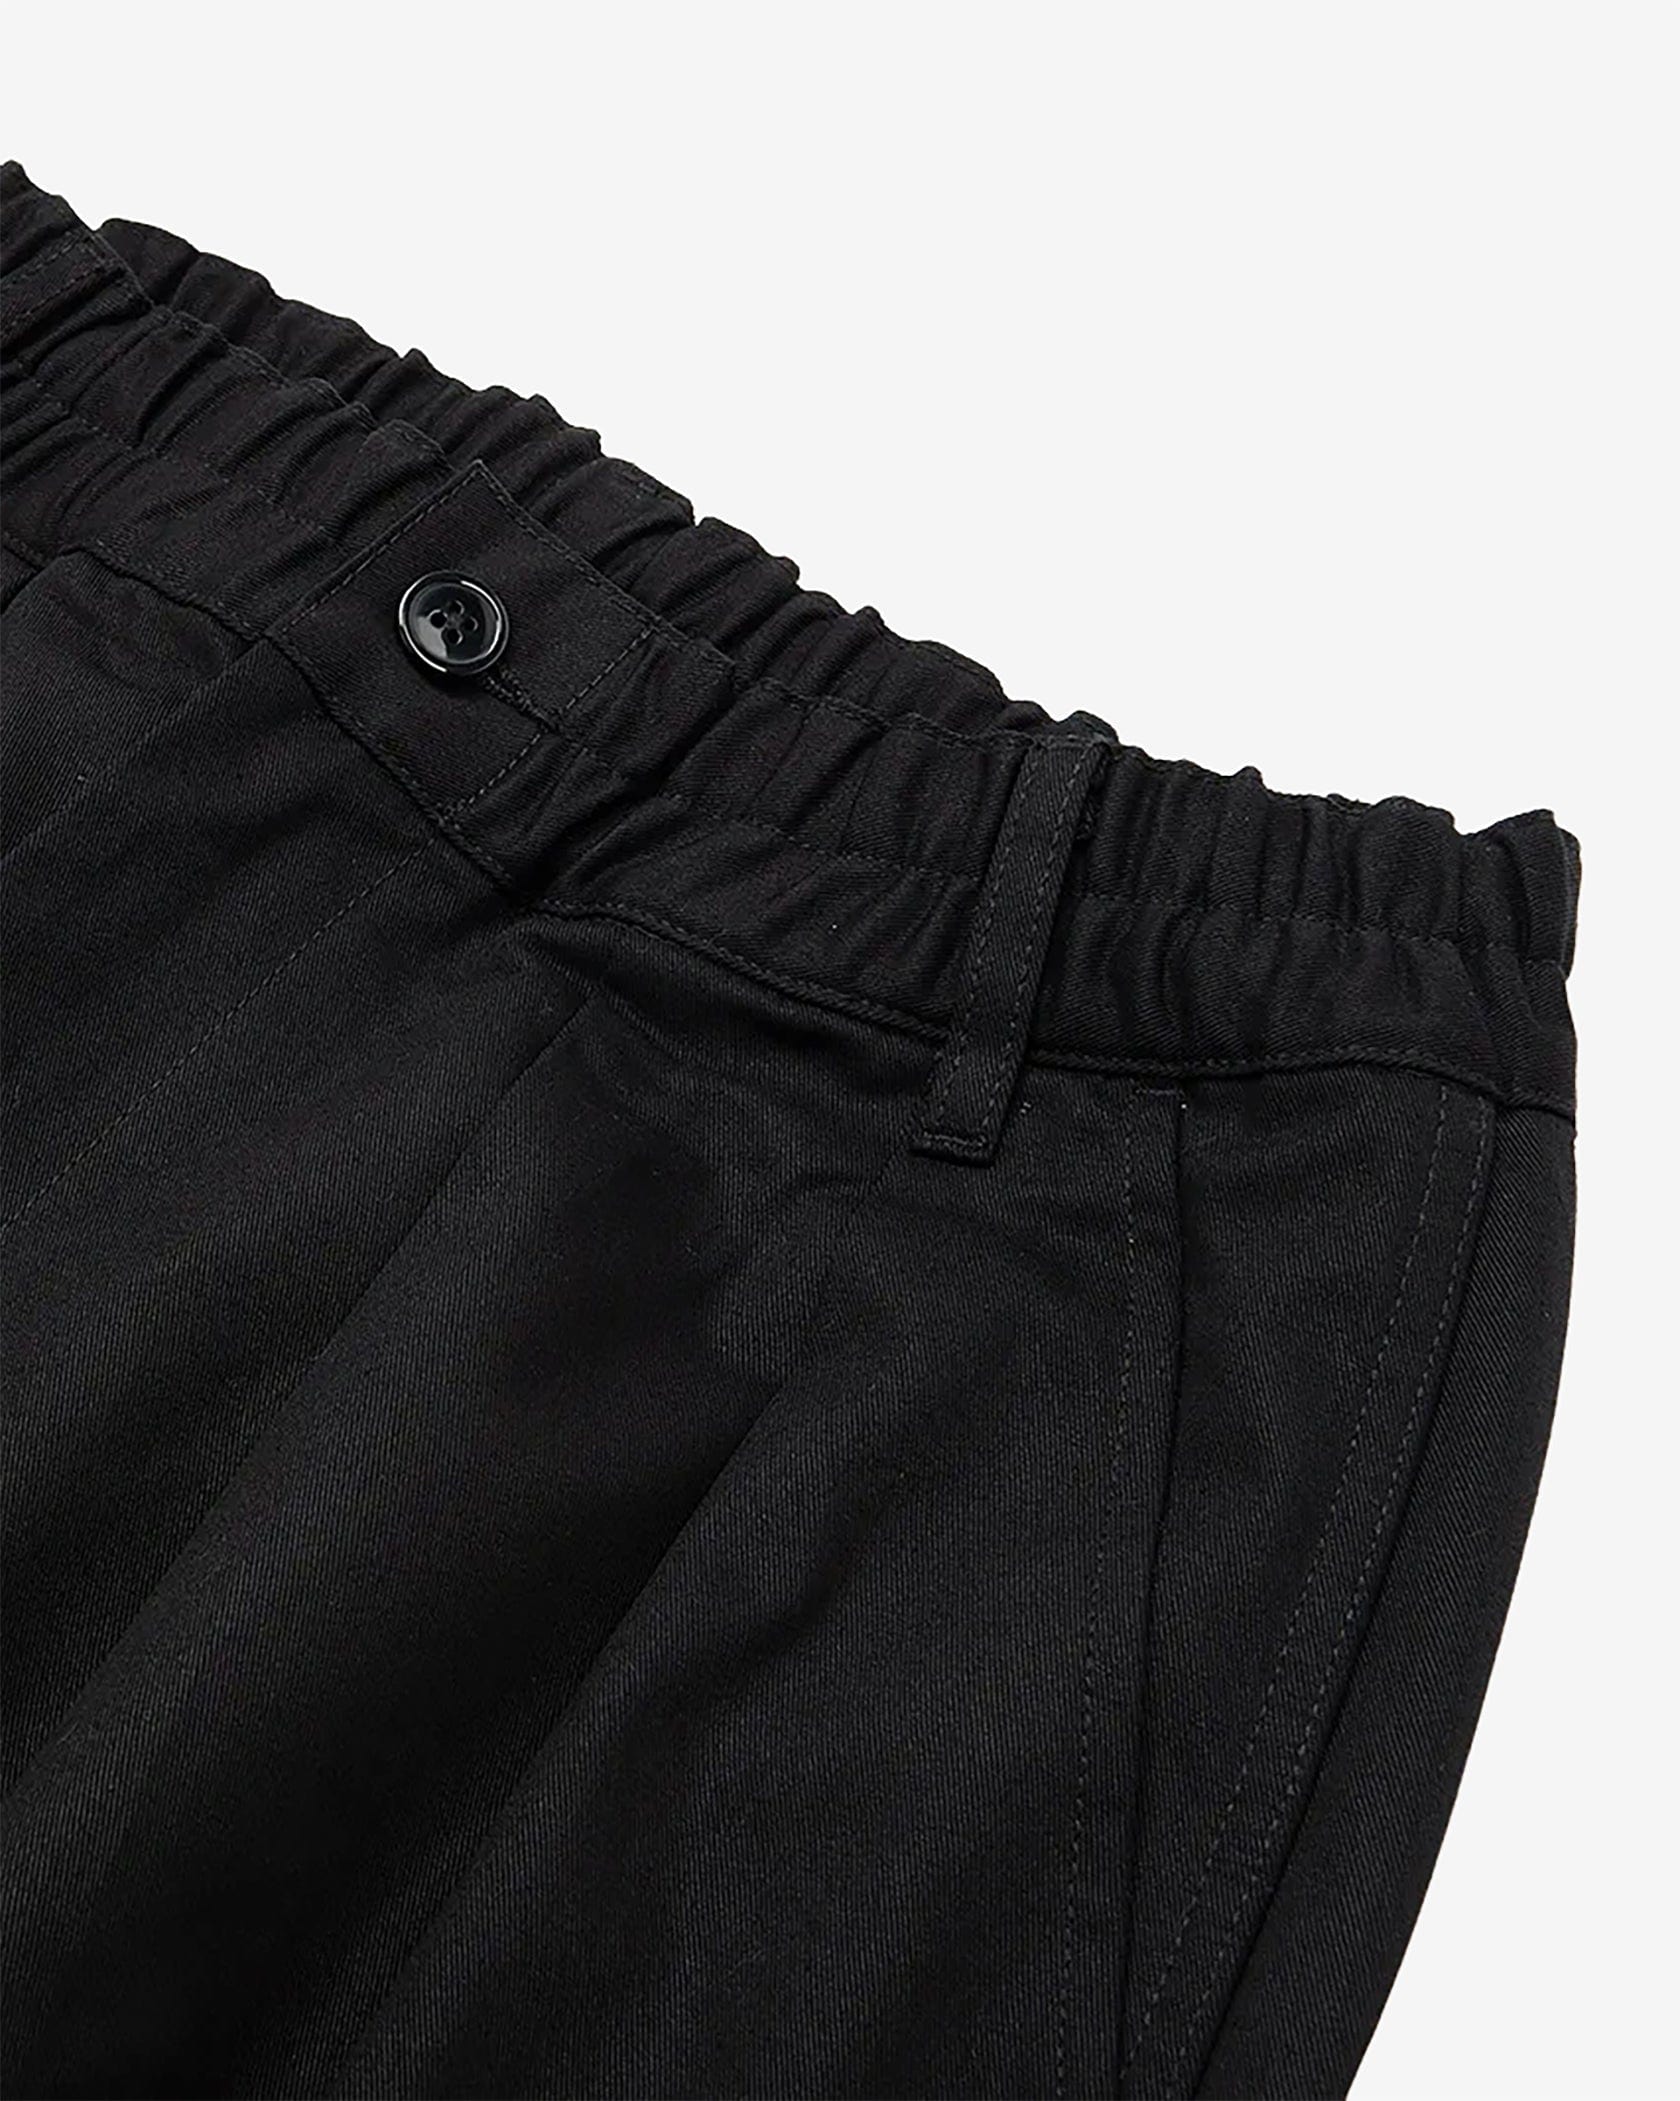 ASOS DESIGN wide balloon trousers in black | ASOS